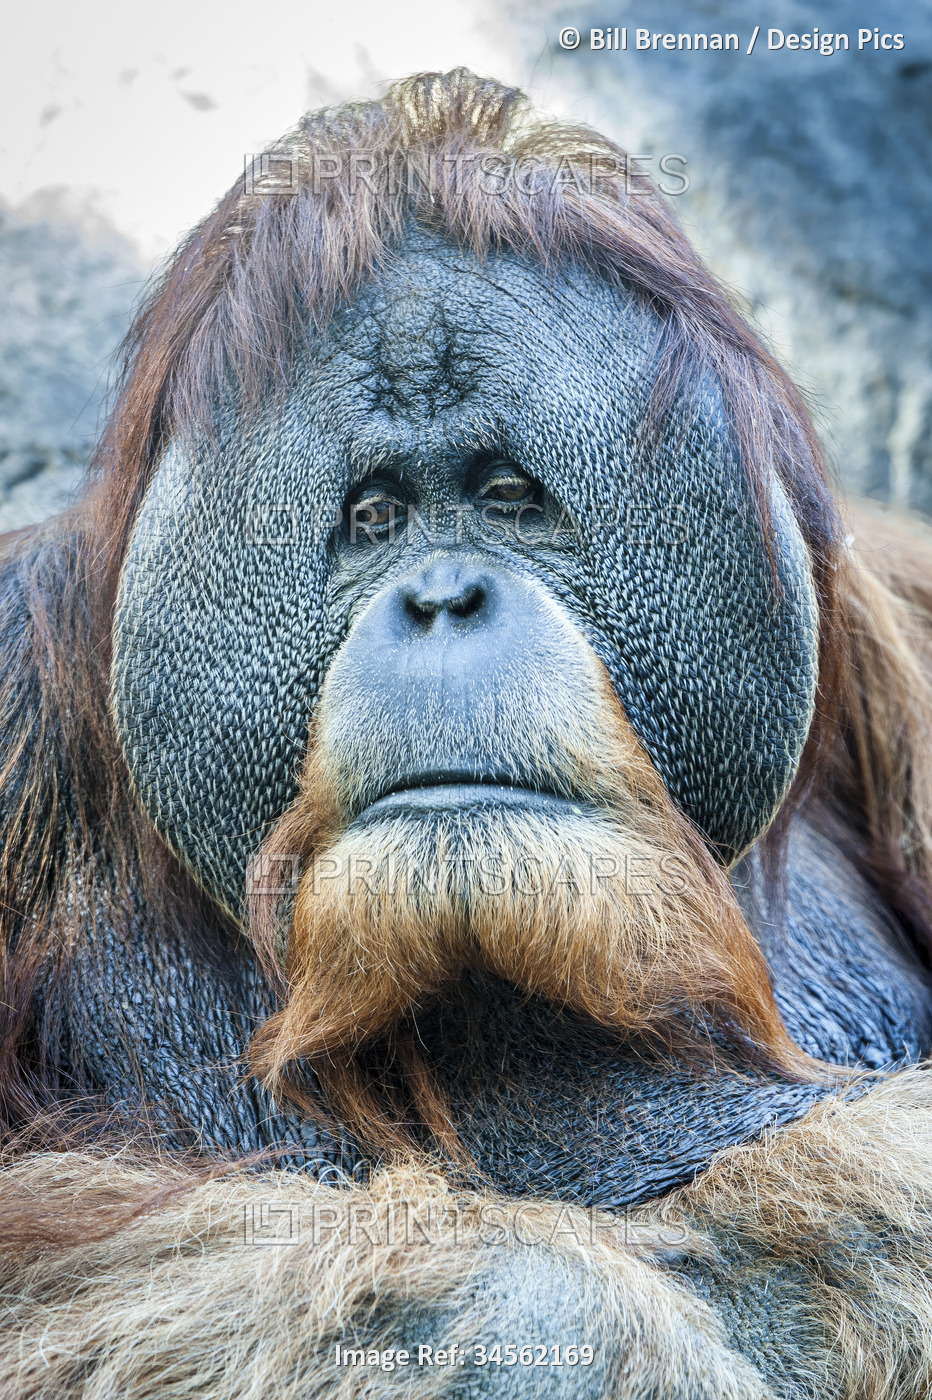 Forlorn gaze of Orangutan; San Diego, California, United States of America